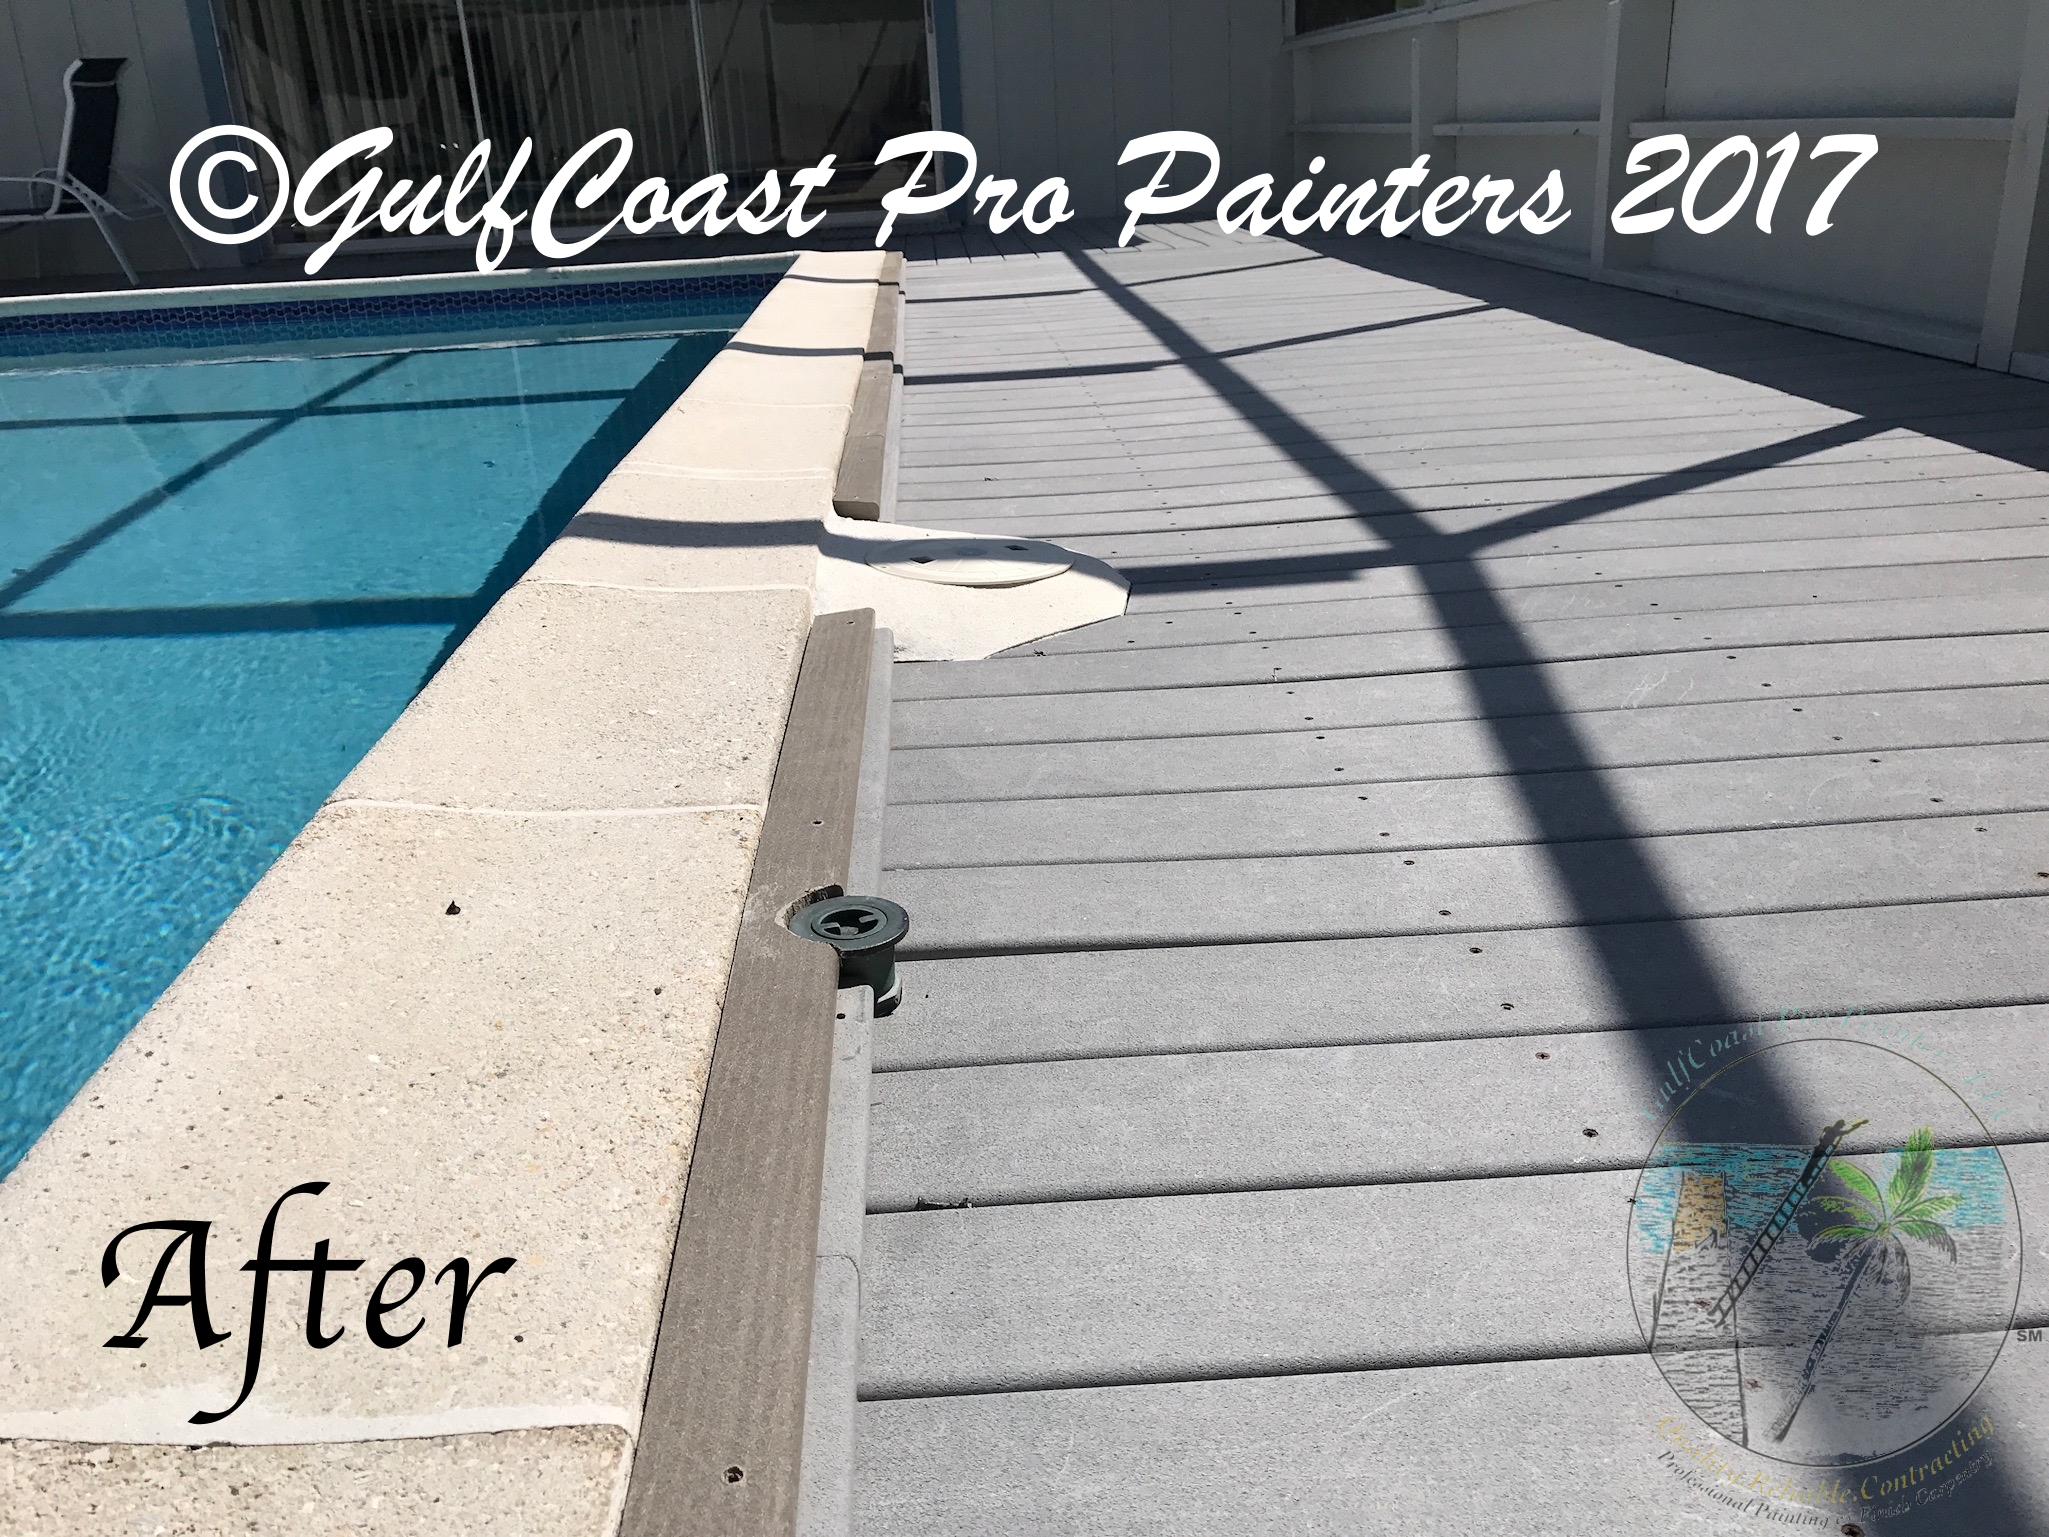 Pool Deck Trim Replacement June 2017 Watermarked4 (1).jpg